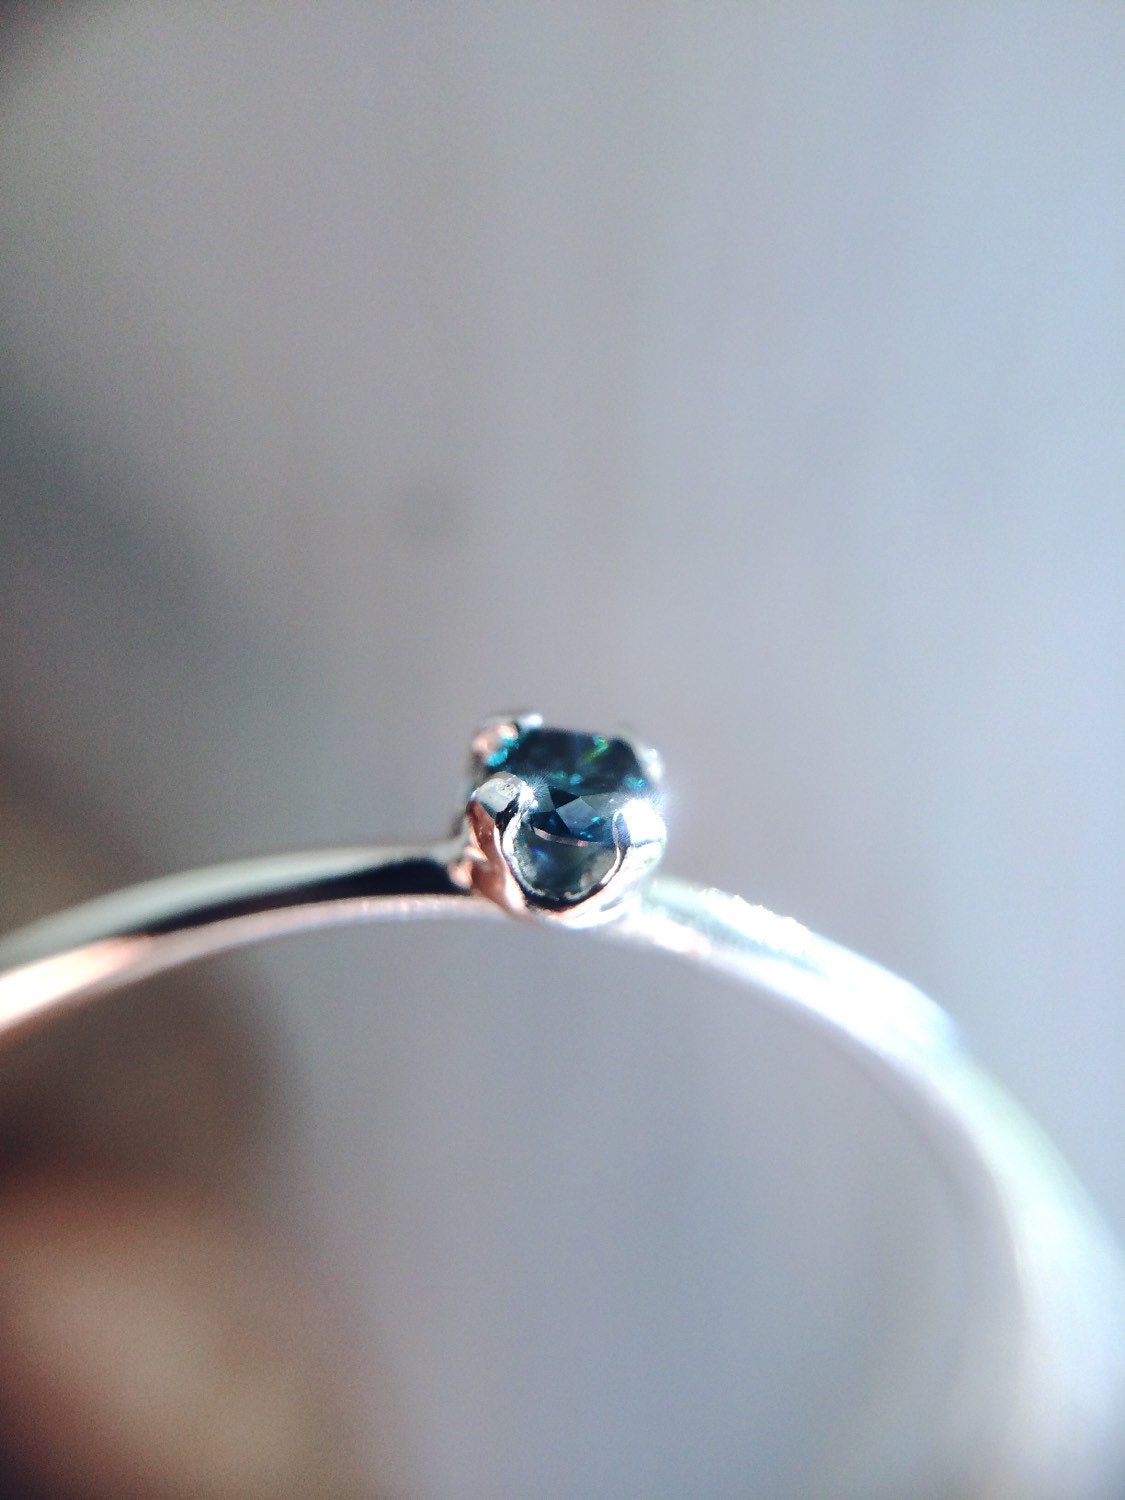 Blue Diamond Ring, Genuine Diamond Ring, Blue Diamond, Slim Ring, Minimalist Ring, Gift, Gemstone Ring, Tiny Diamond Ring, Diamond Ring